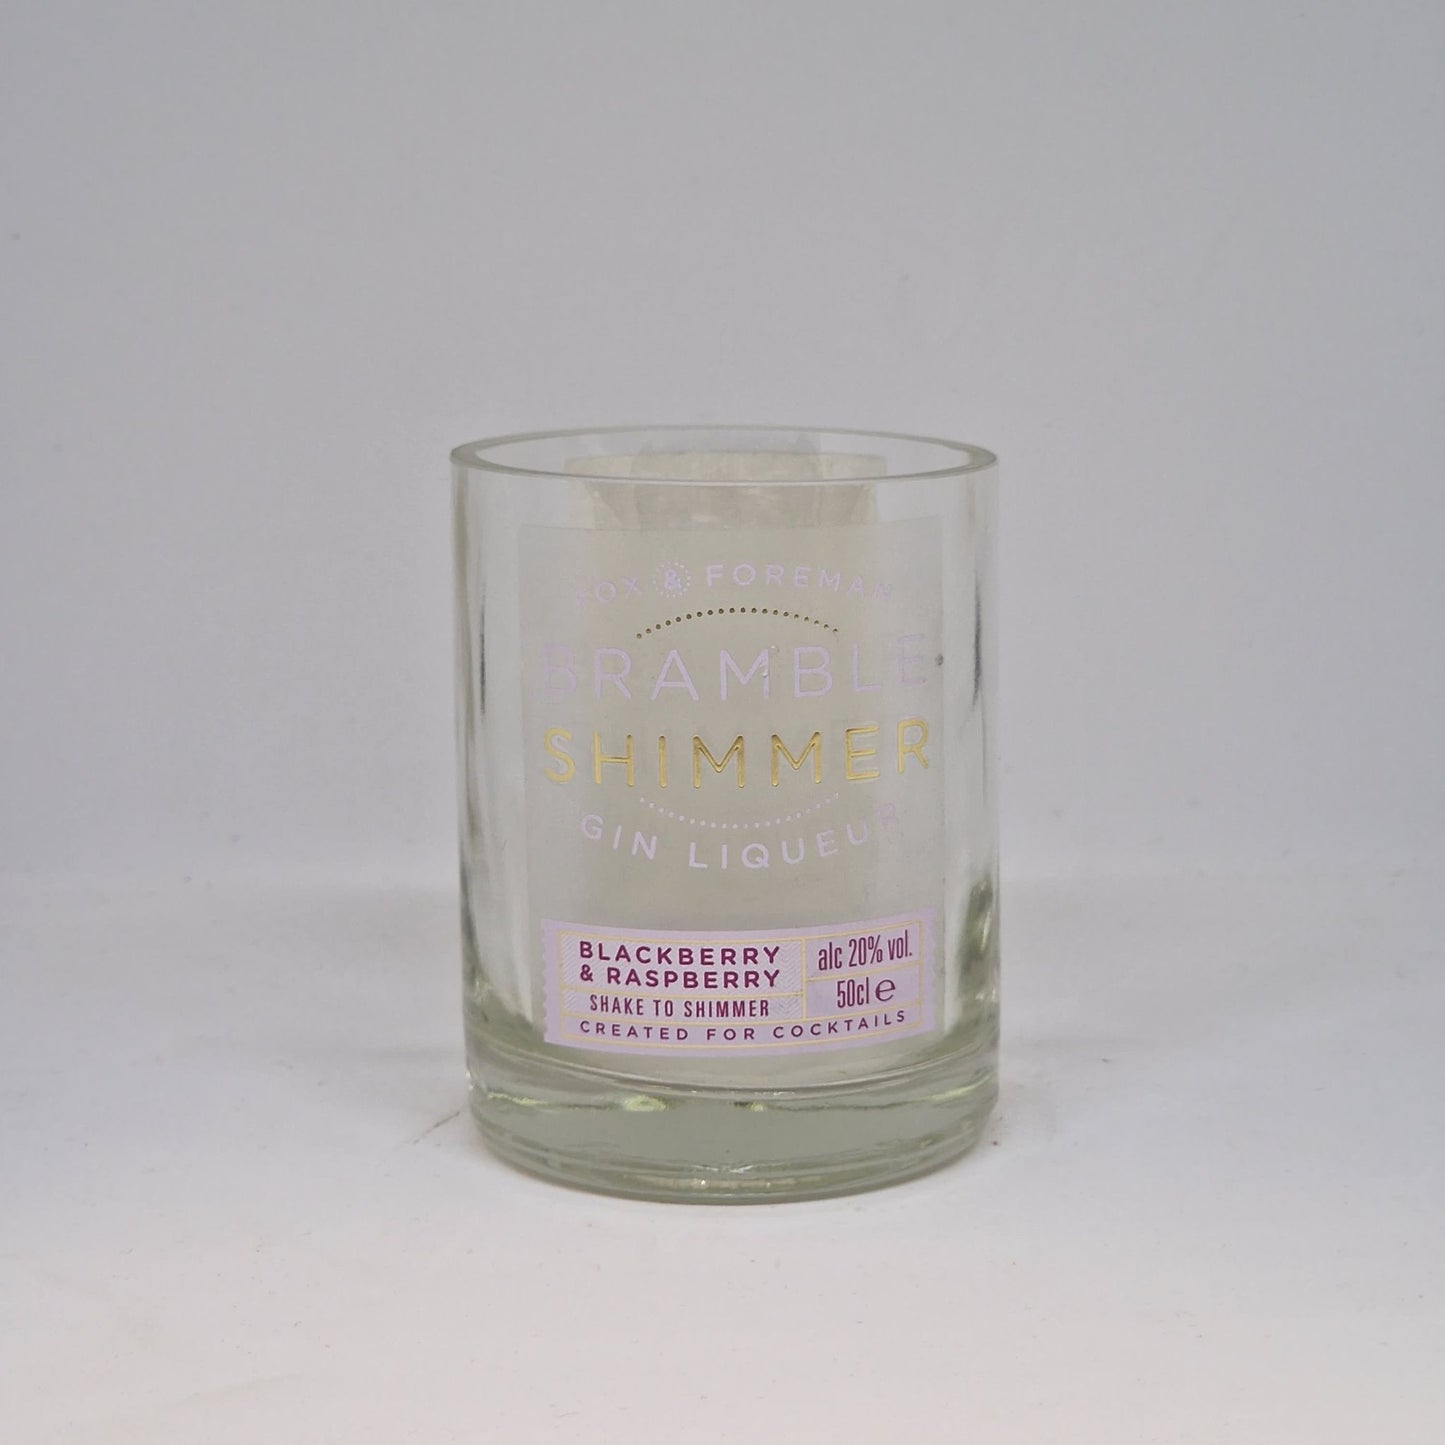 Bramble Shimmer Gin Bottle Candle